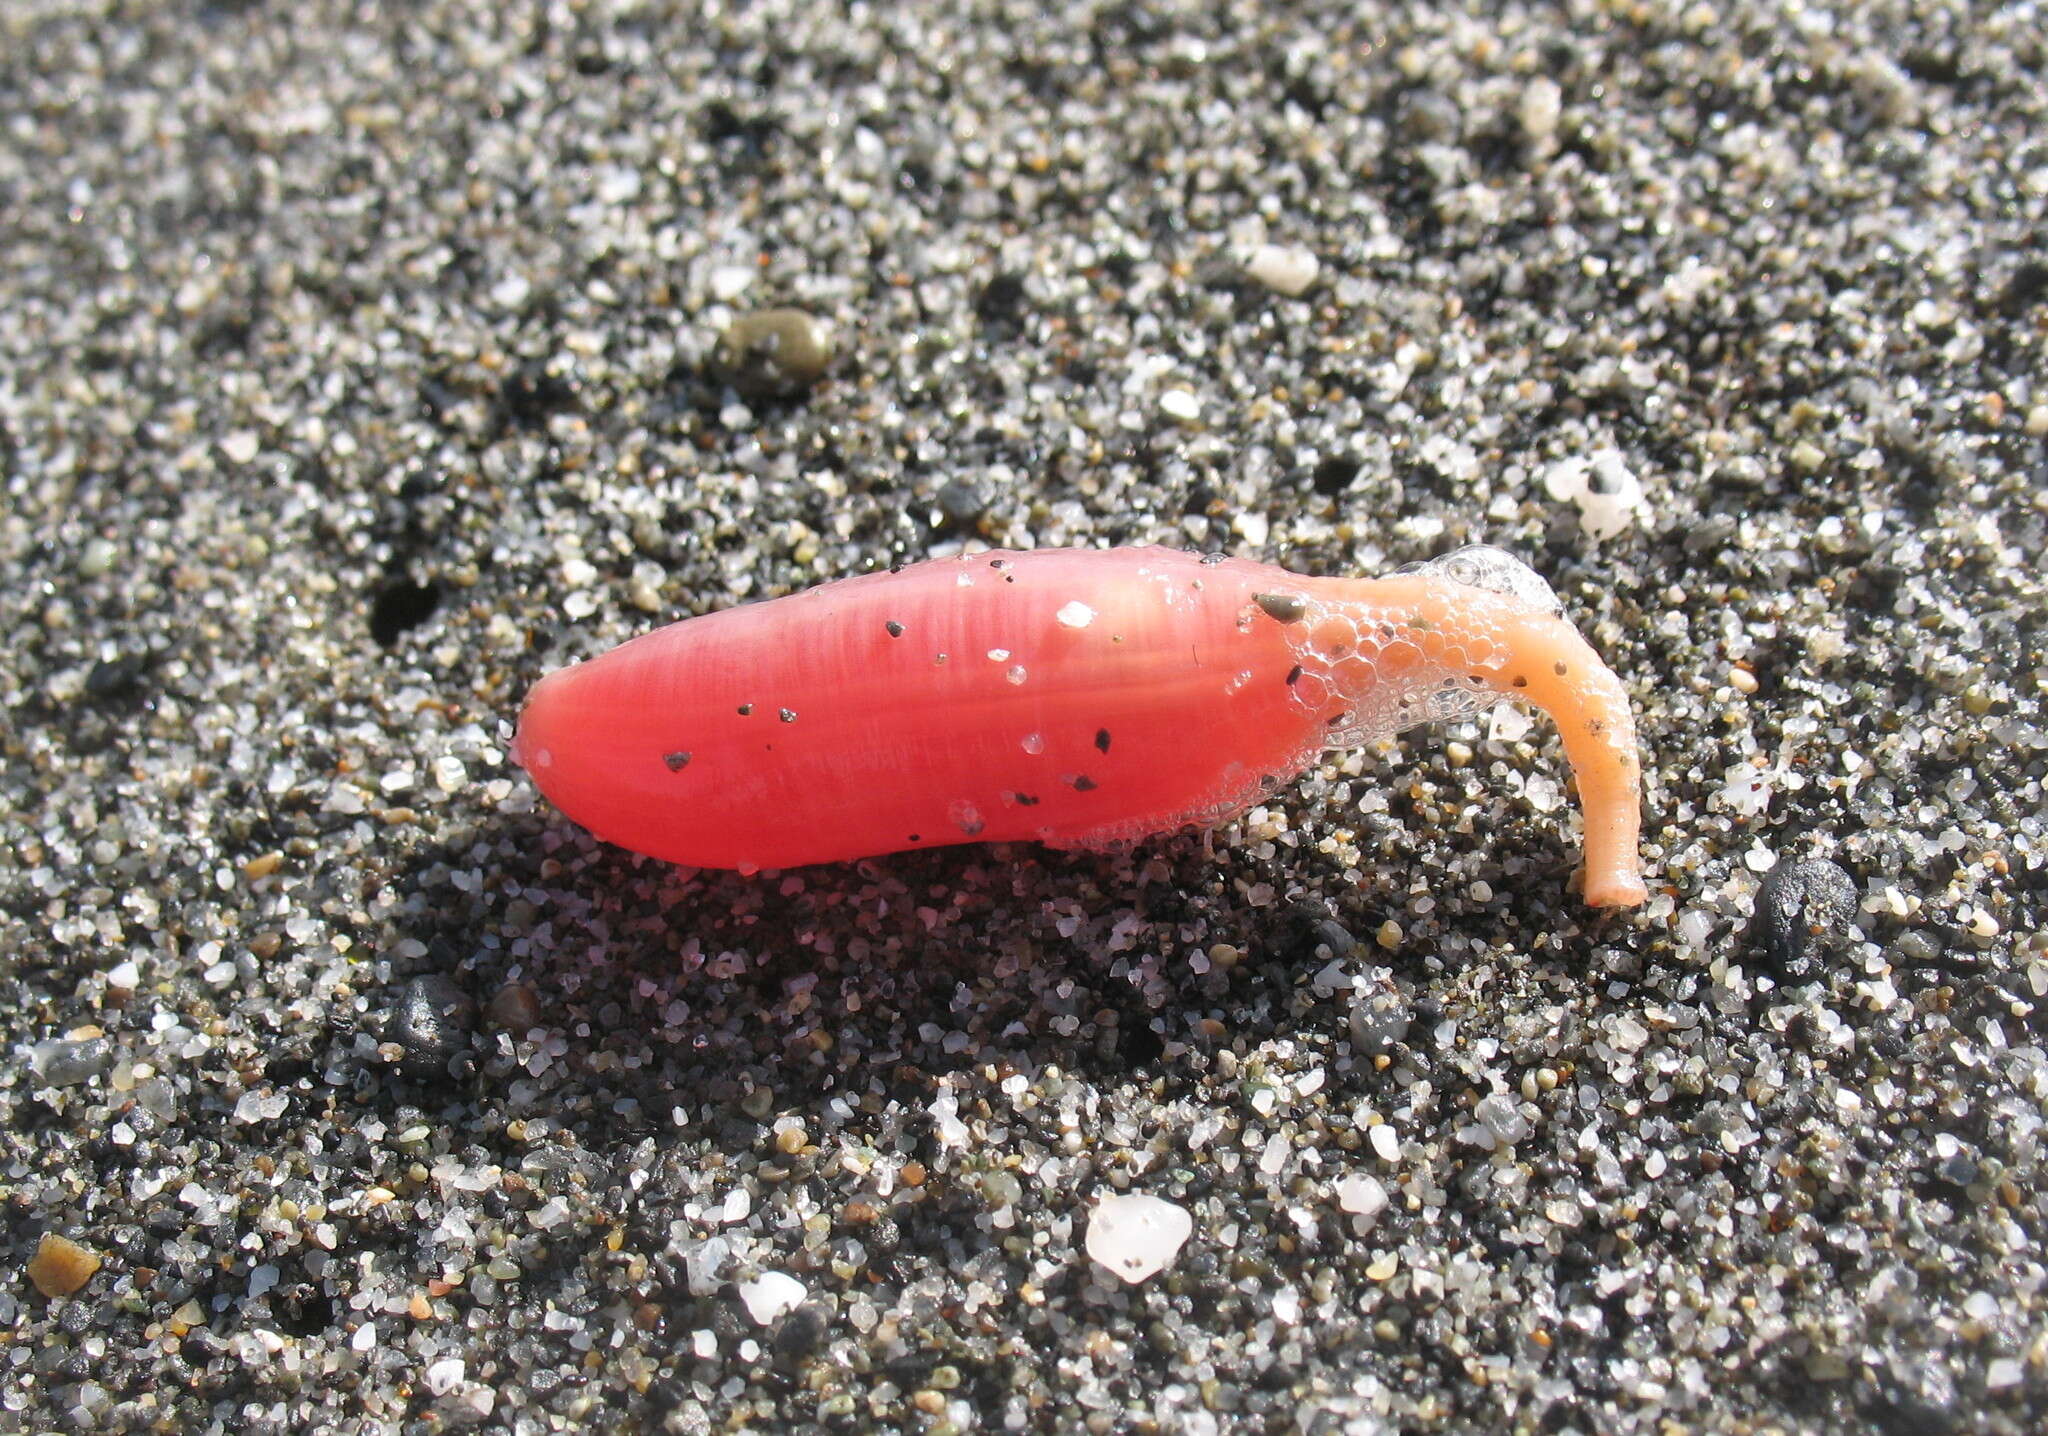 Image of rat-tailed fusiform sea cucumber